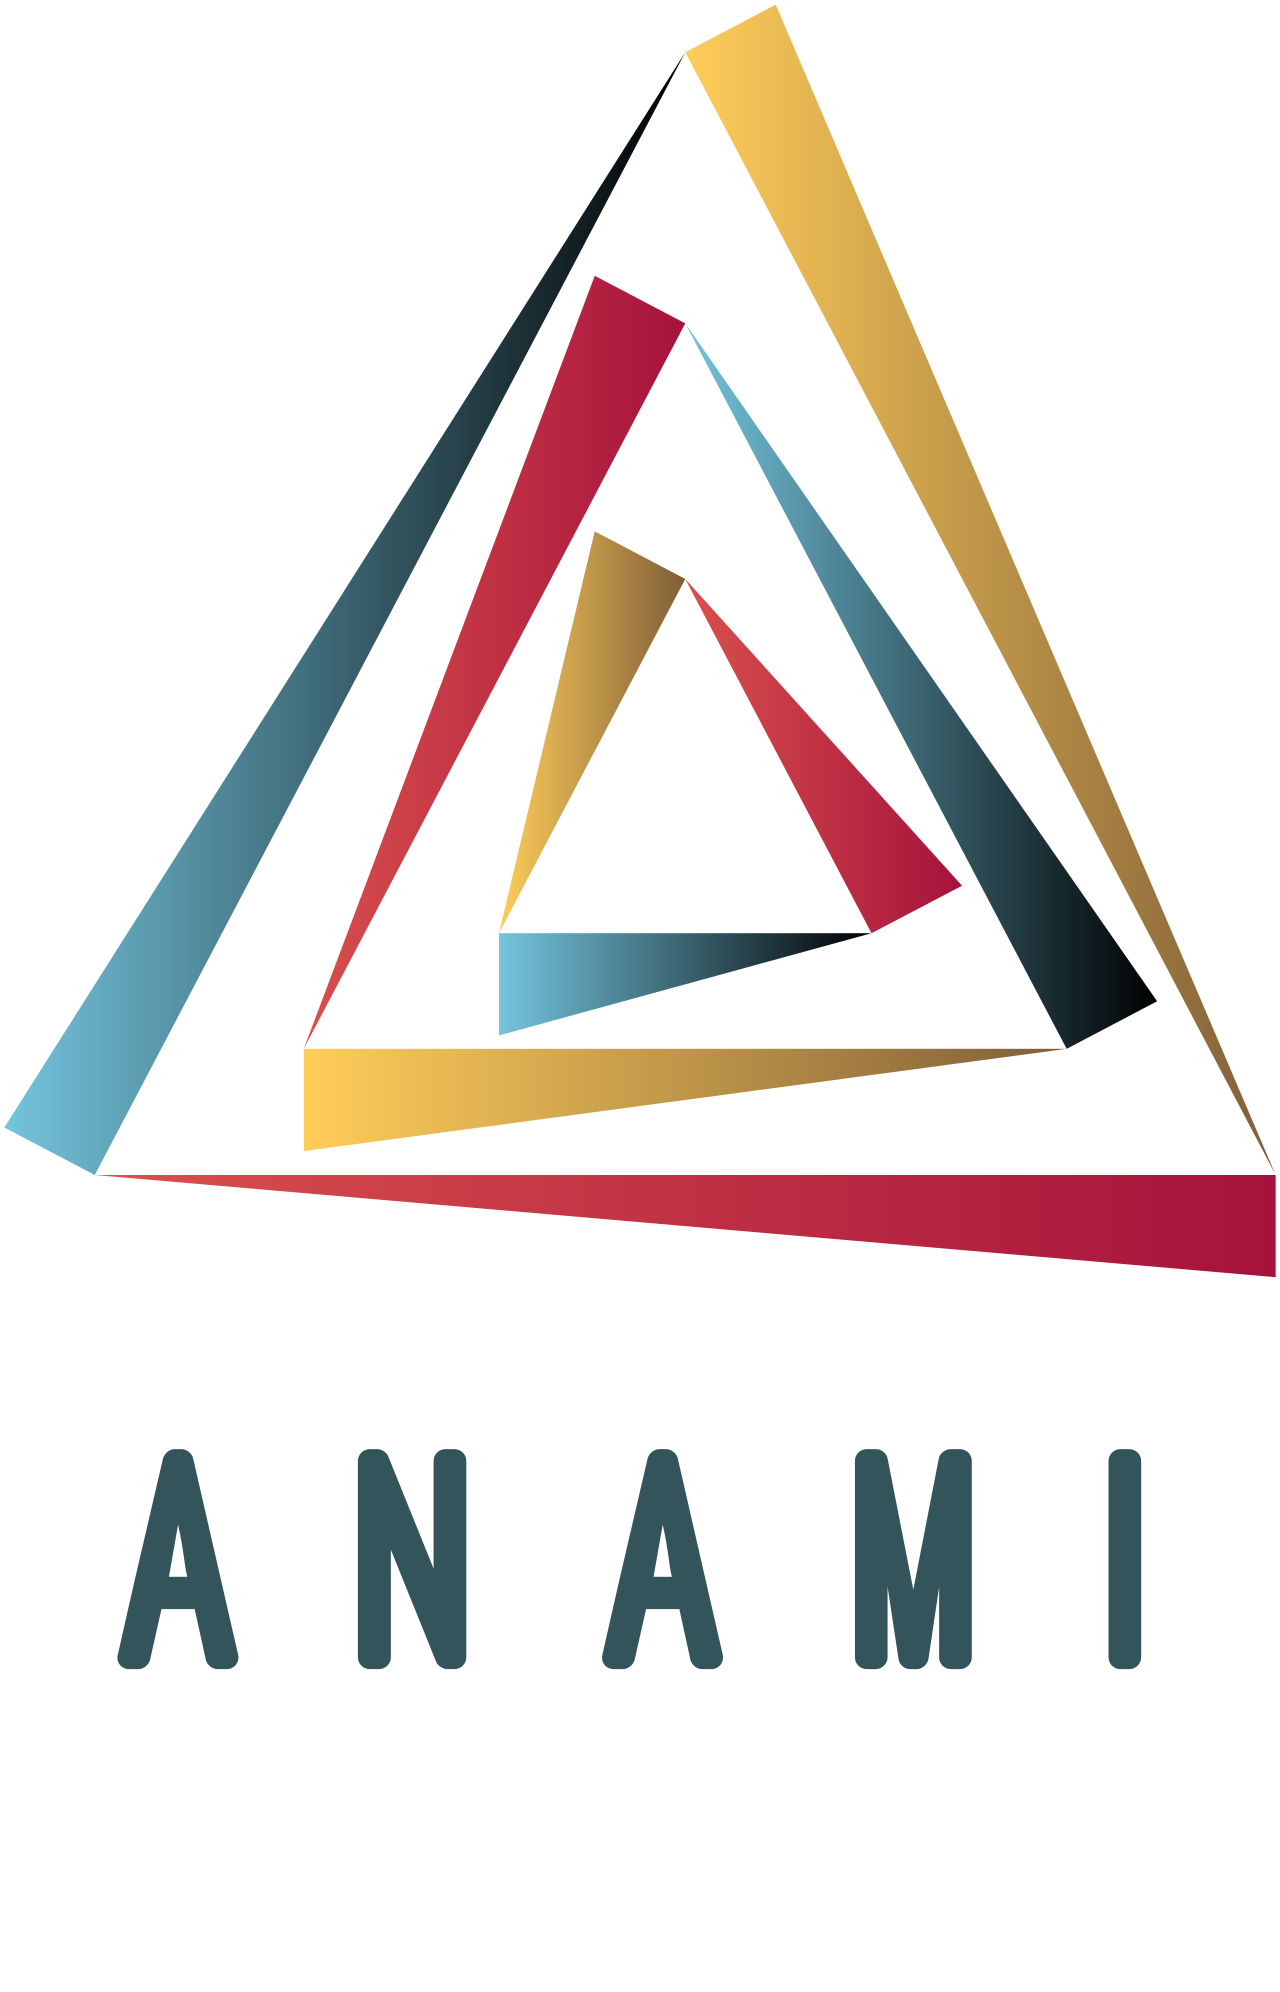 ANAMI's logo